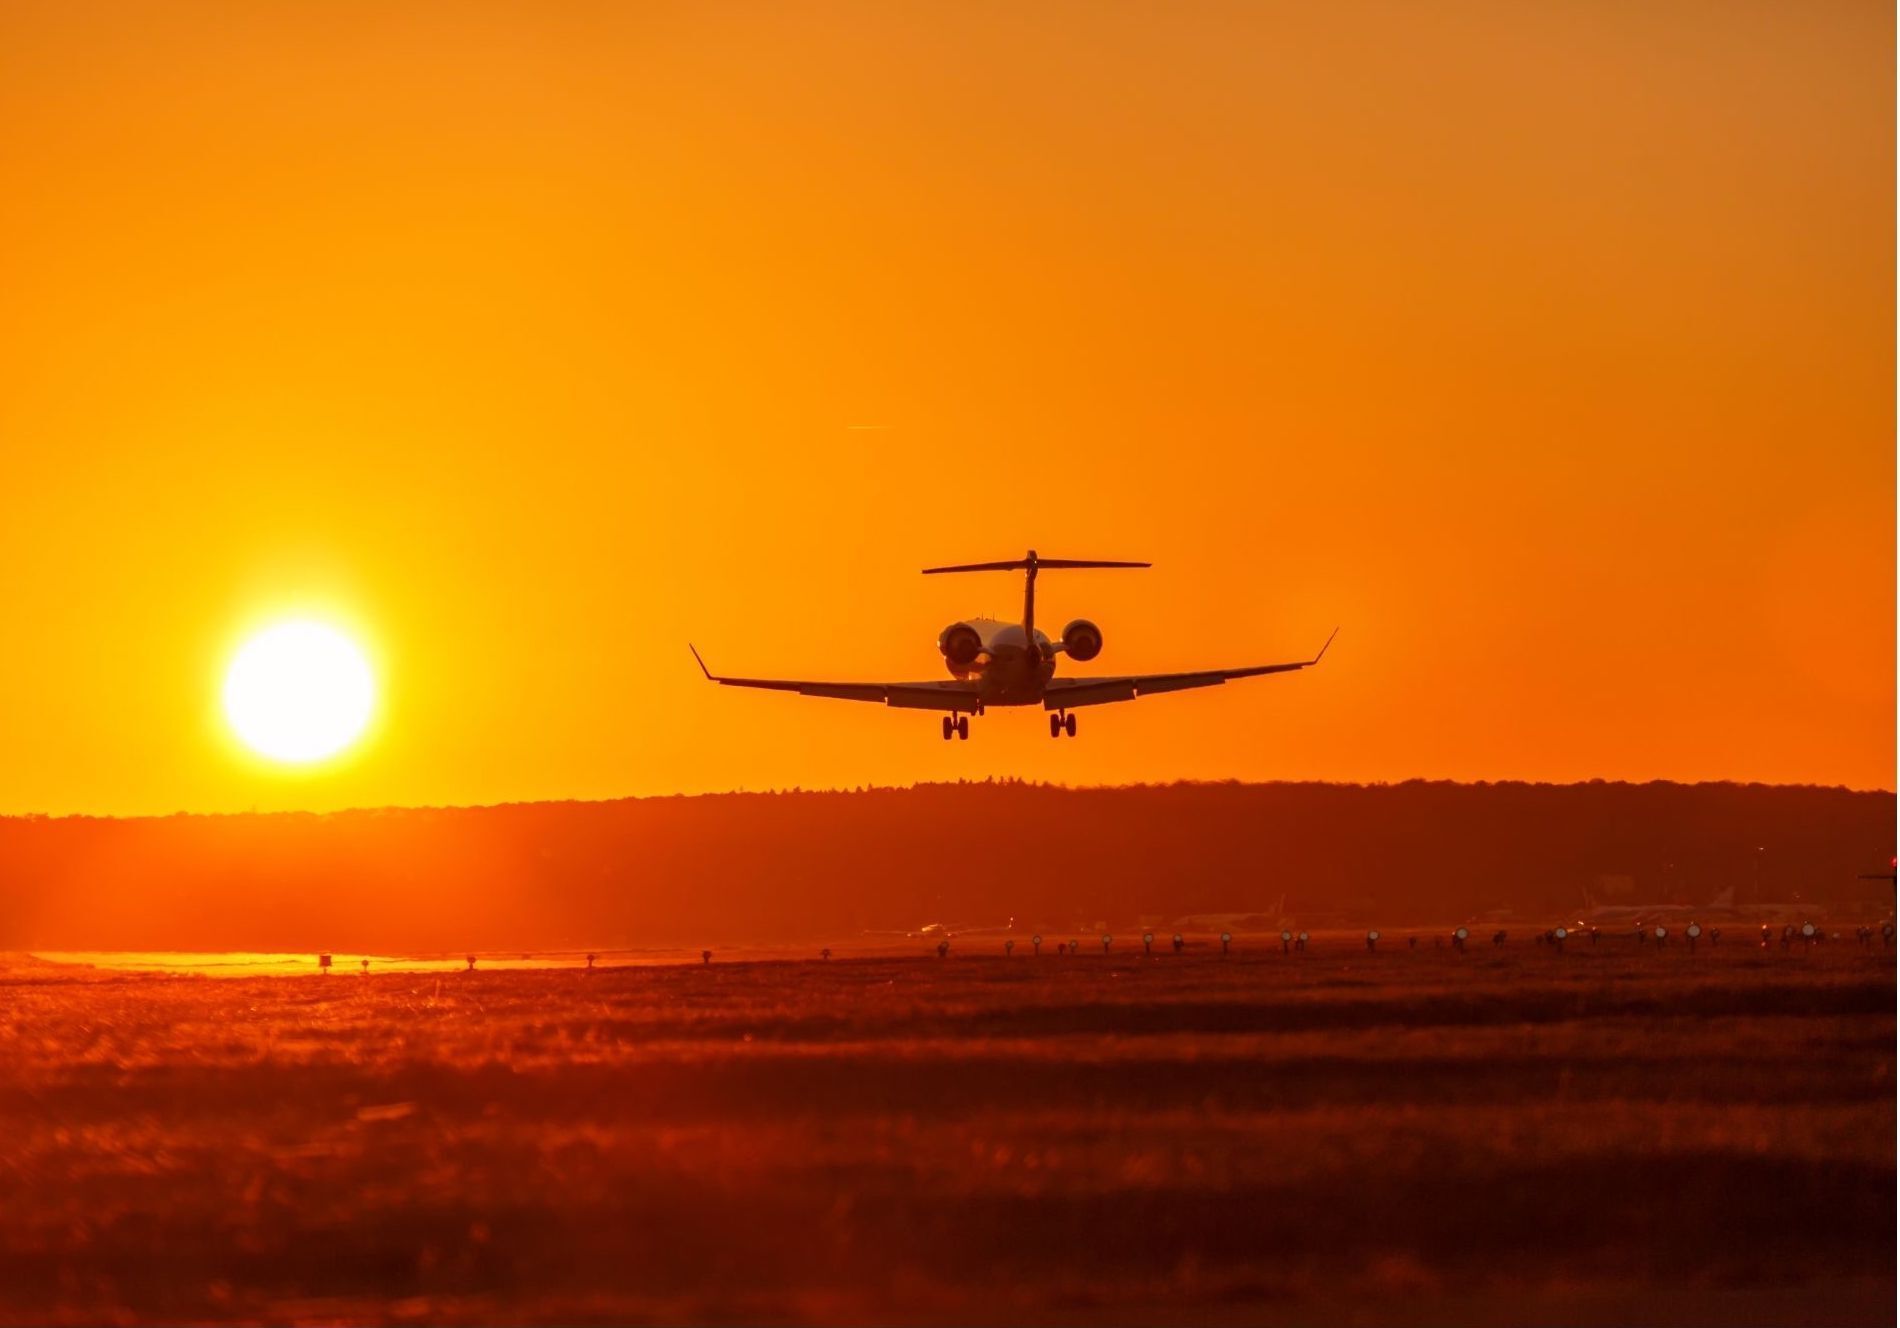 airplane landing or taking off at sunrise or sunset